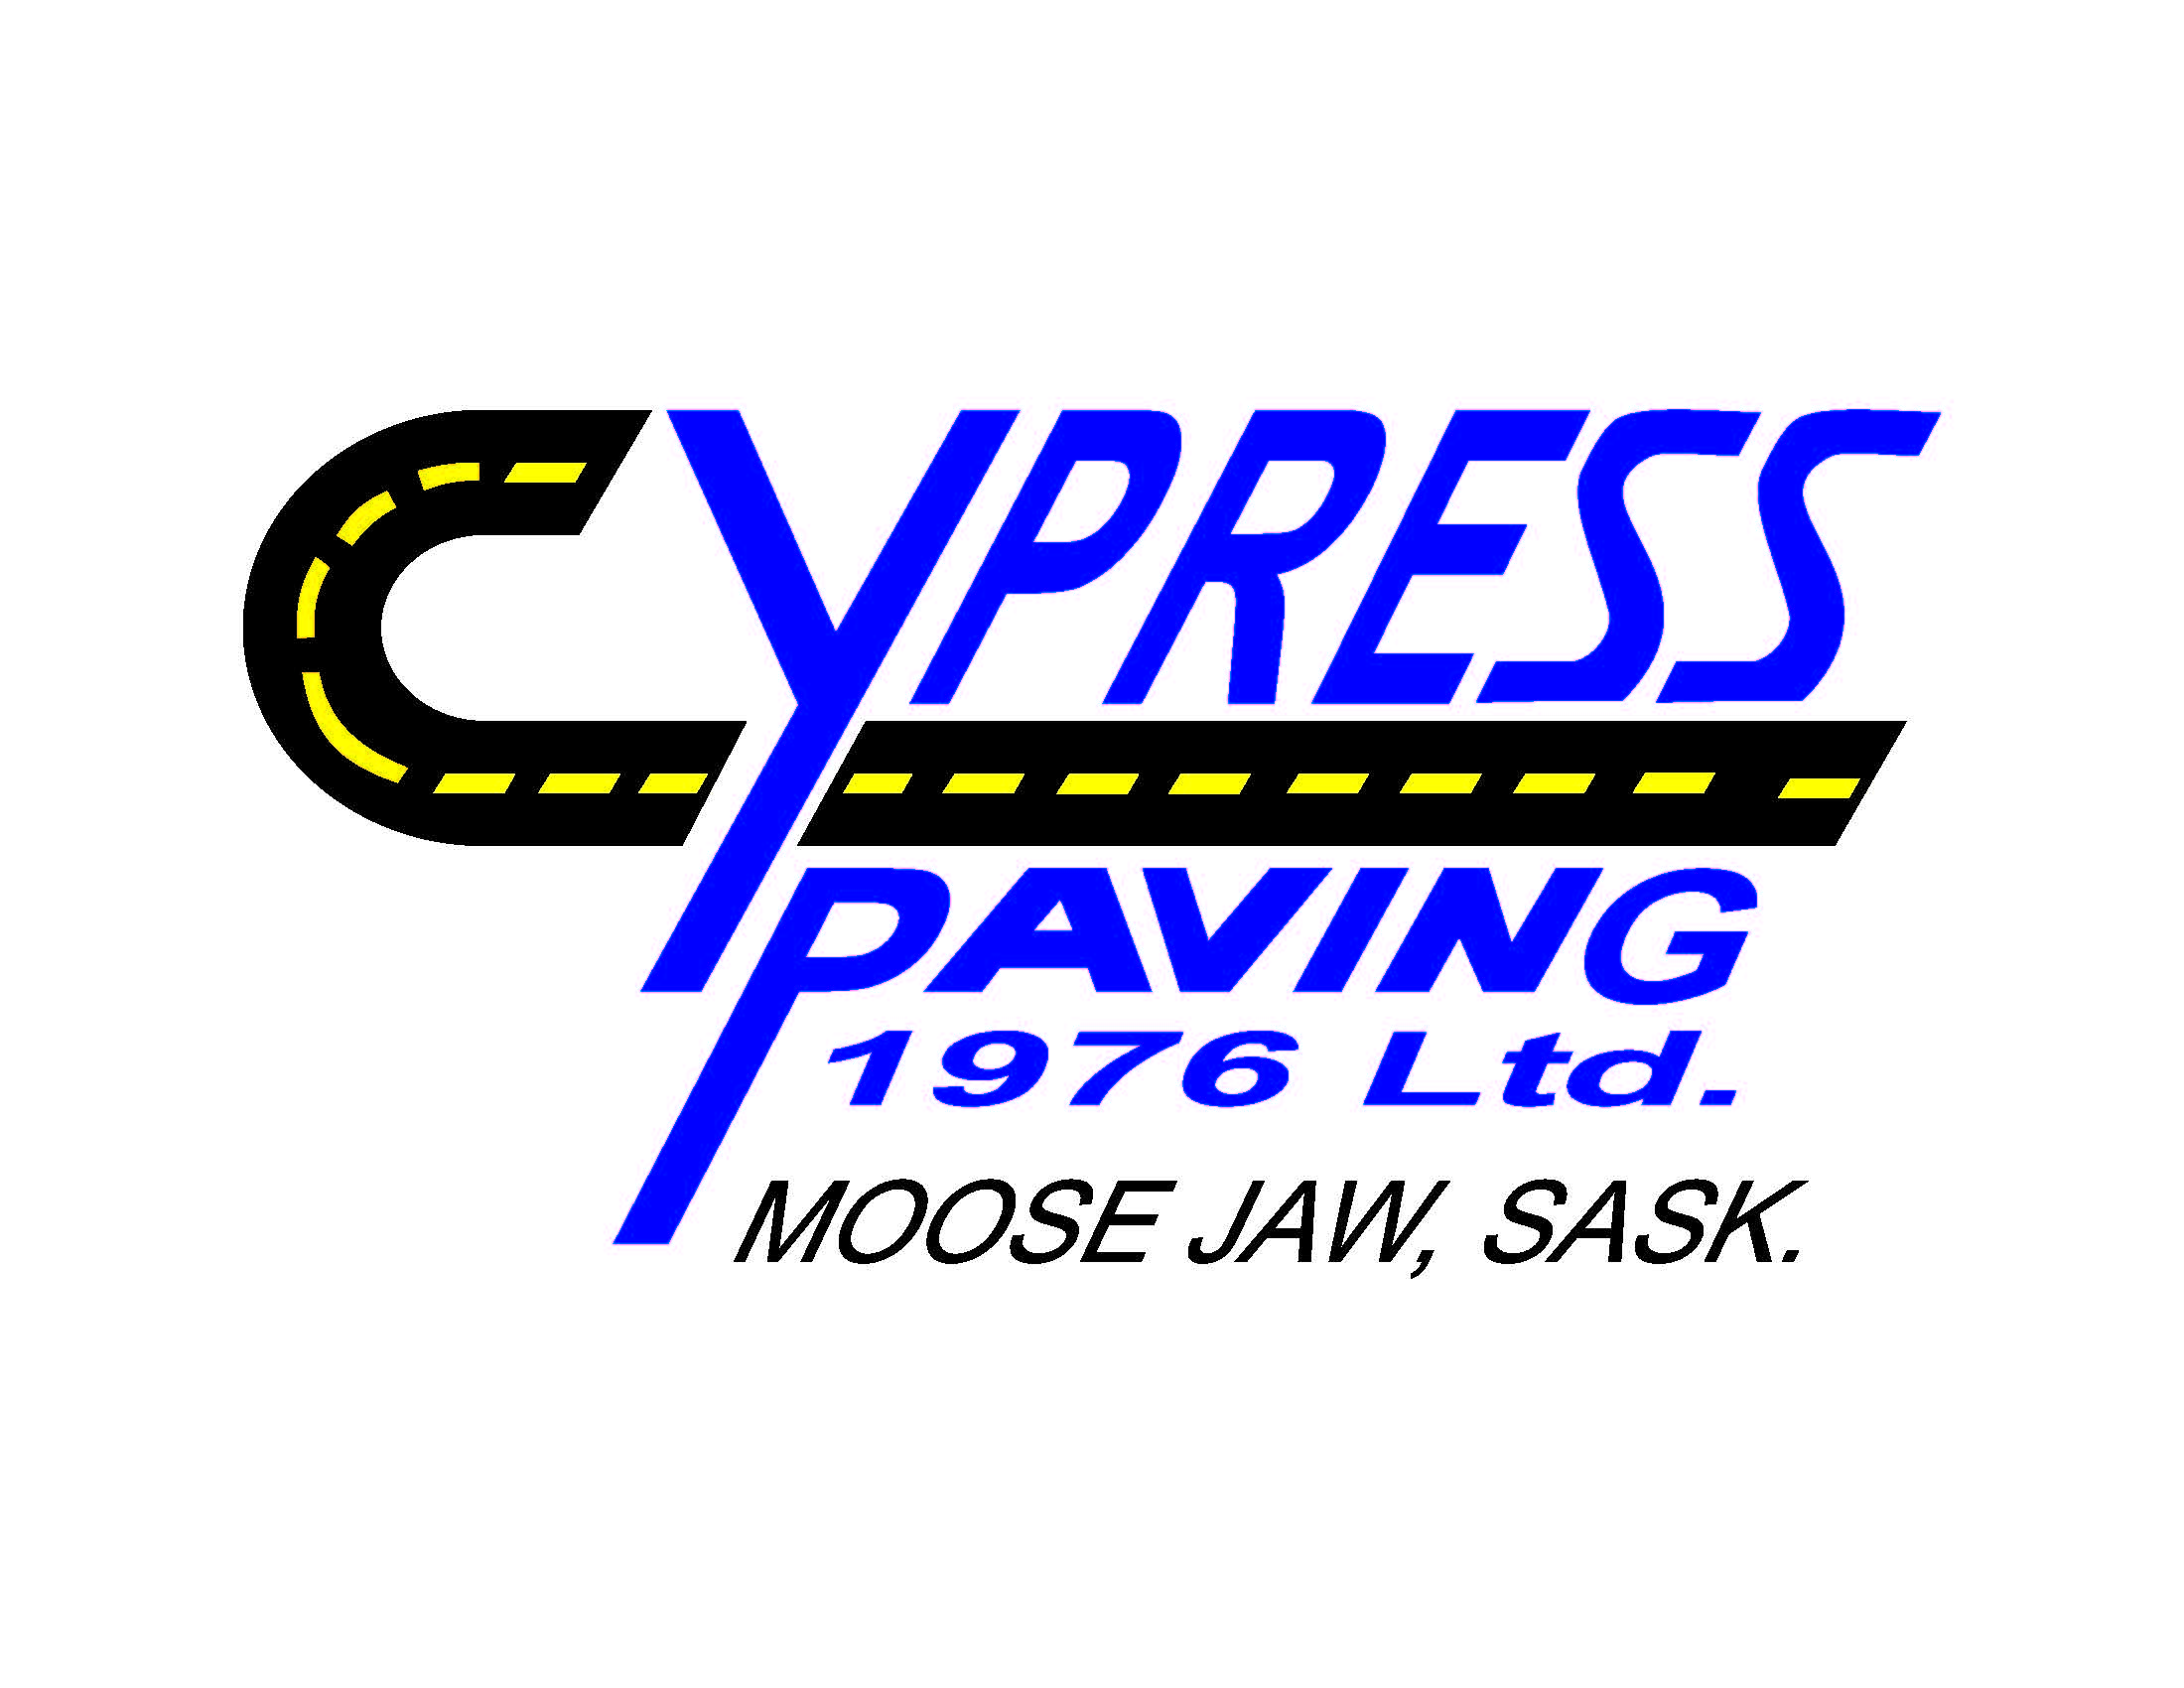 Cypress Paving